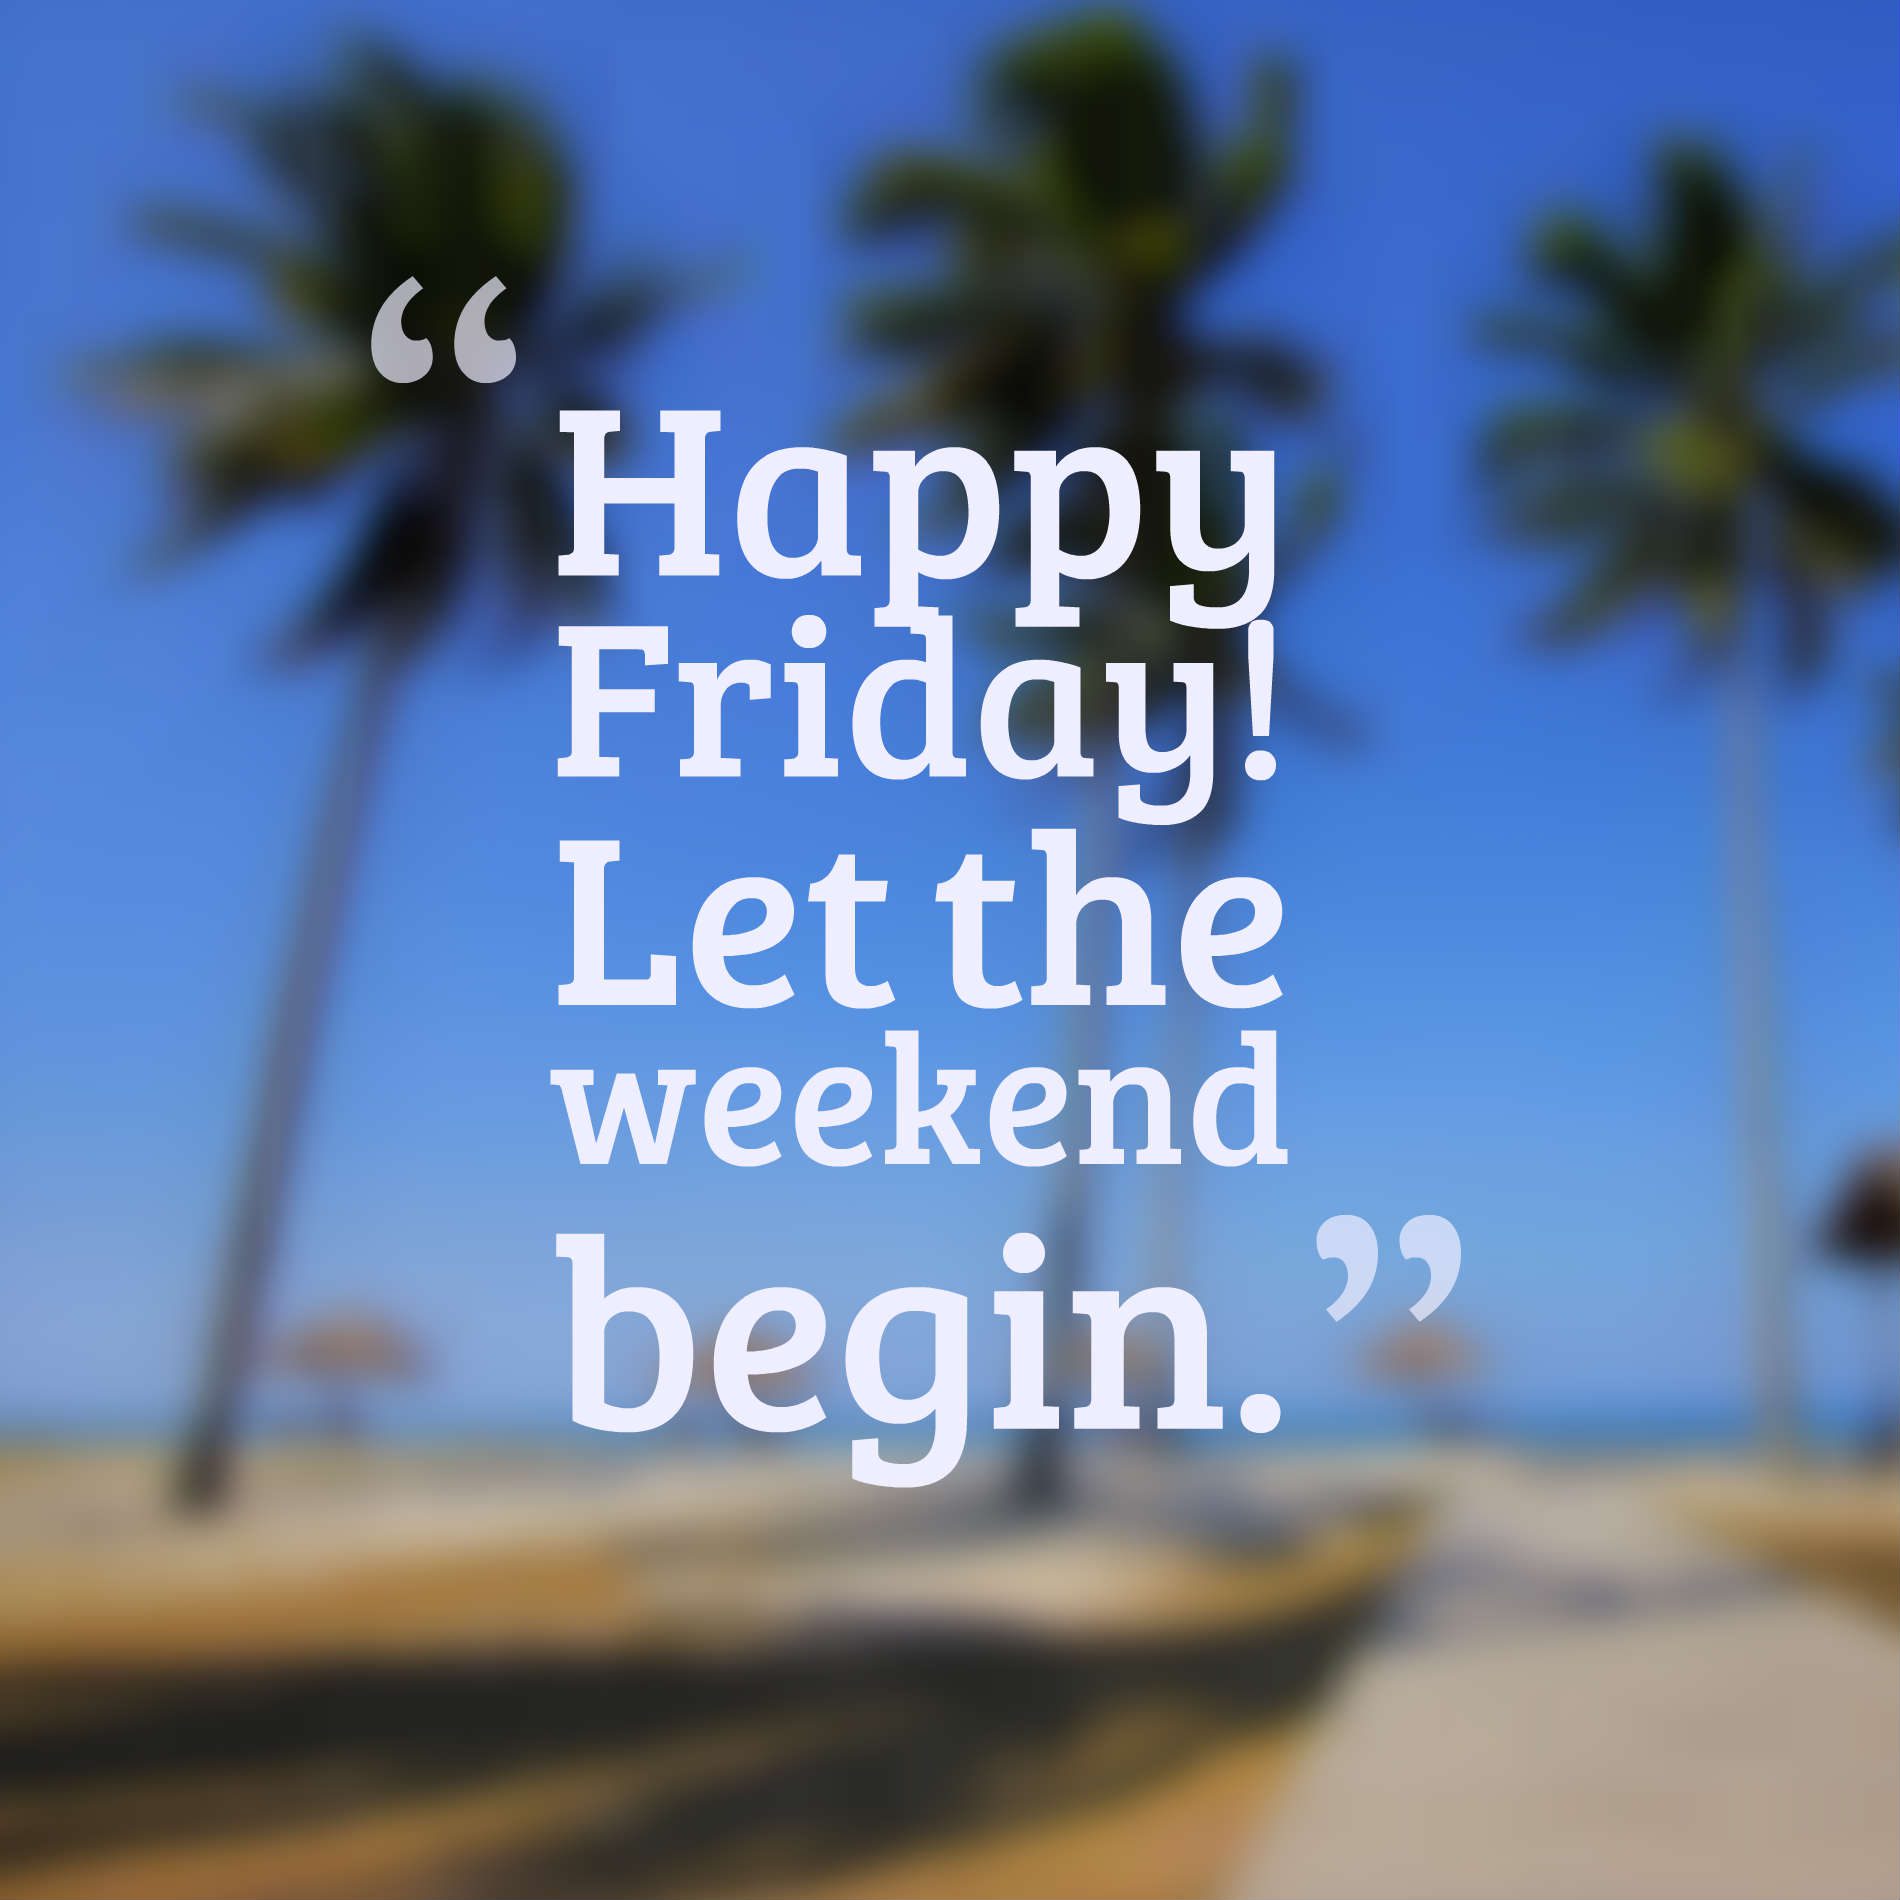 Happy Friday! Let the weekend begin.